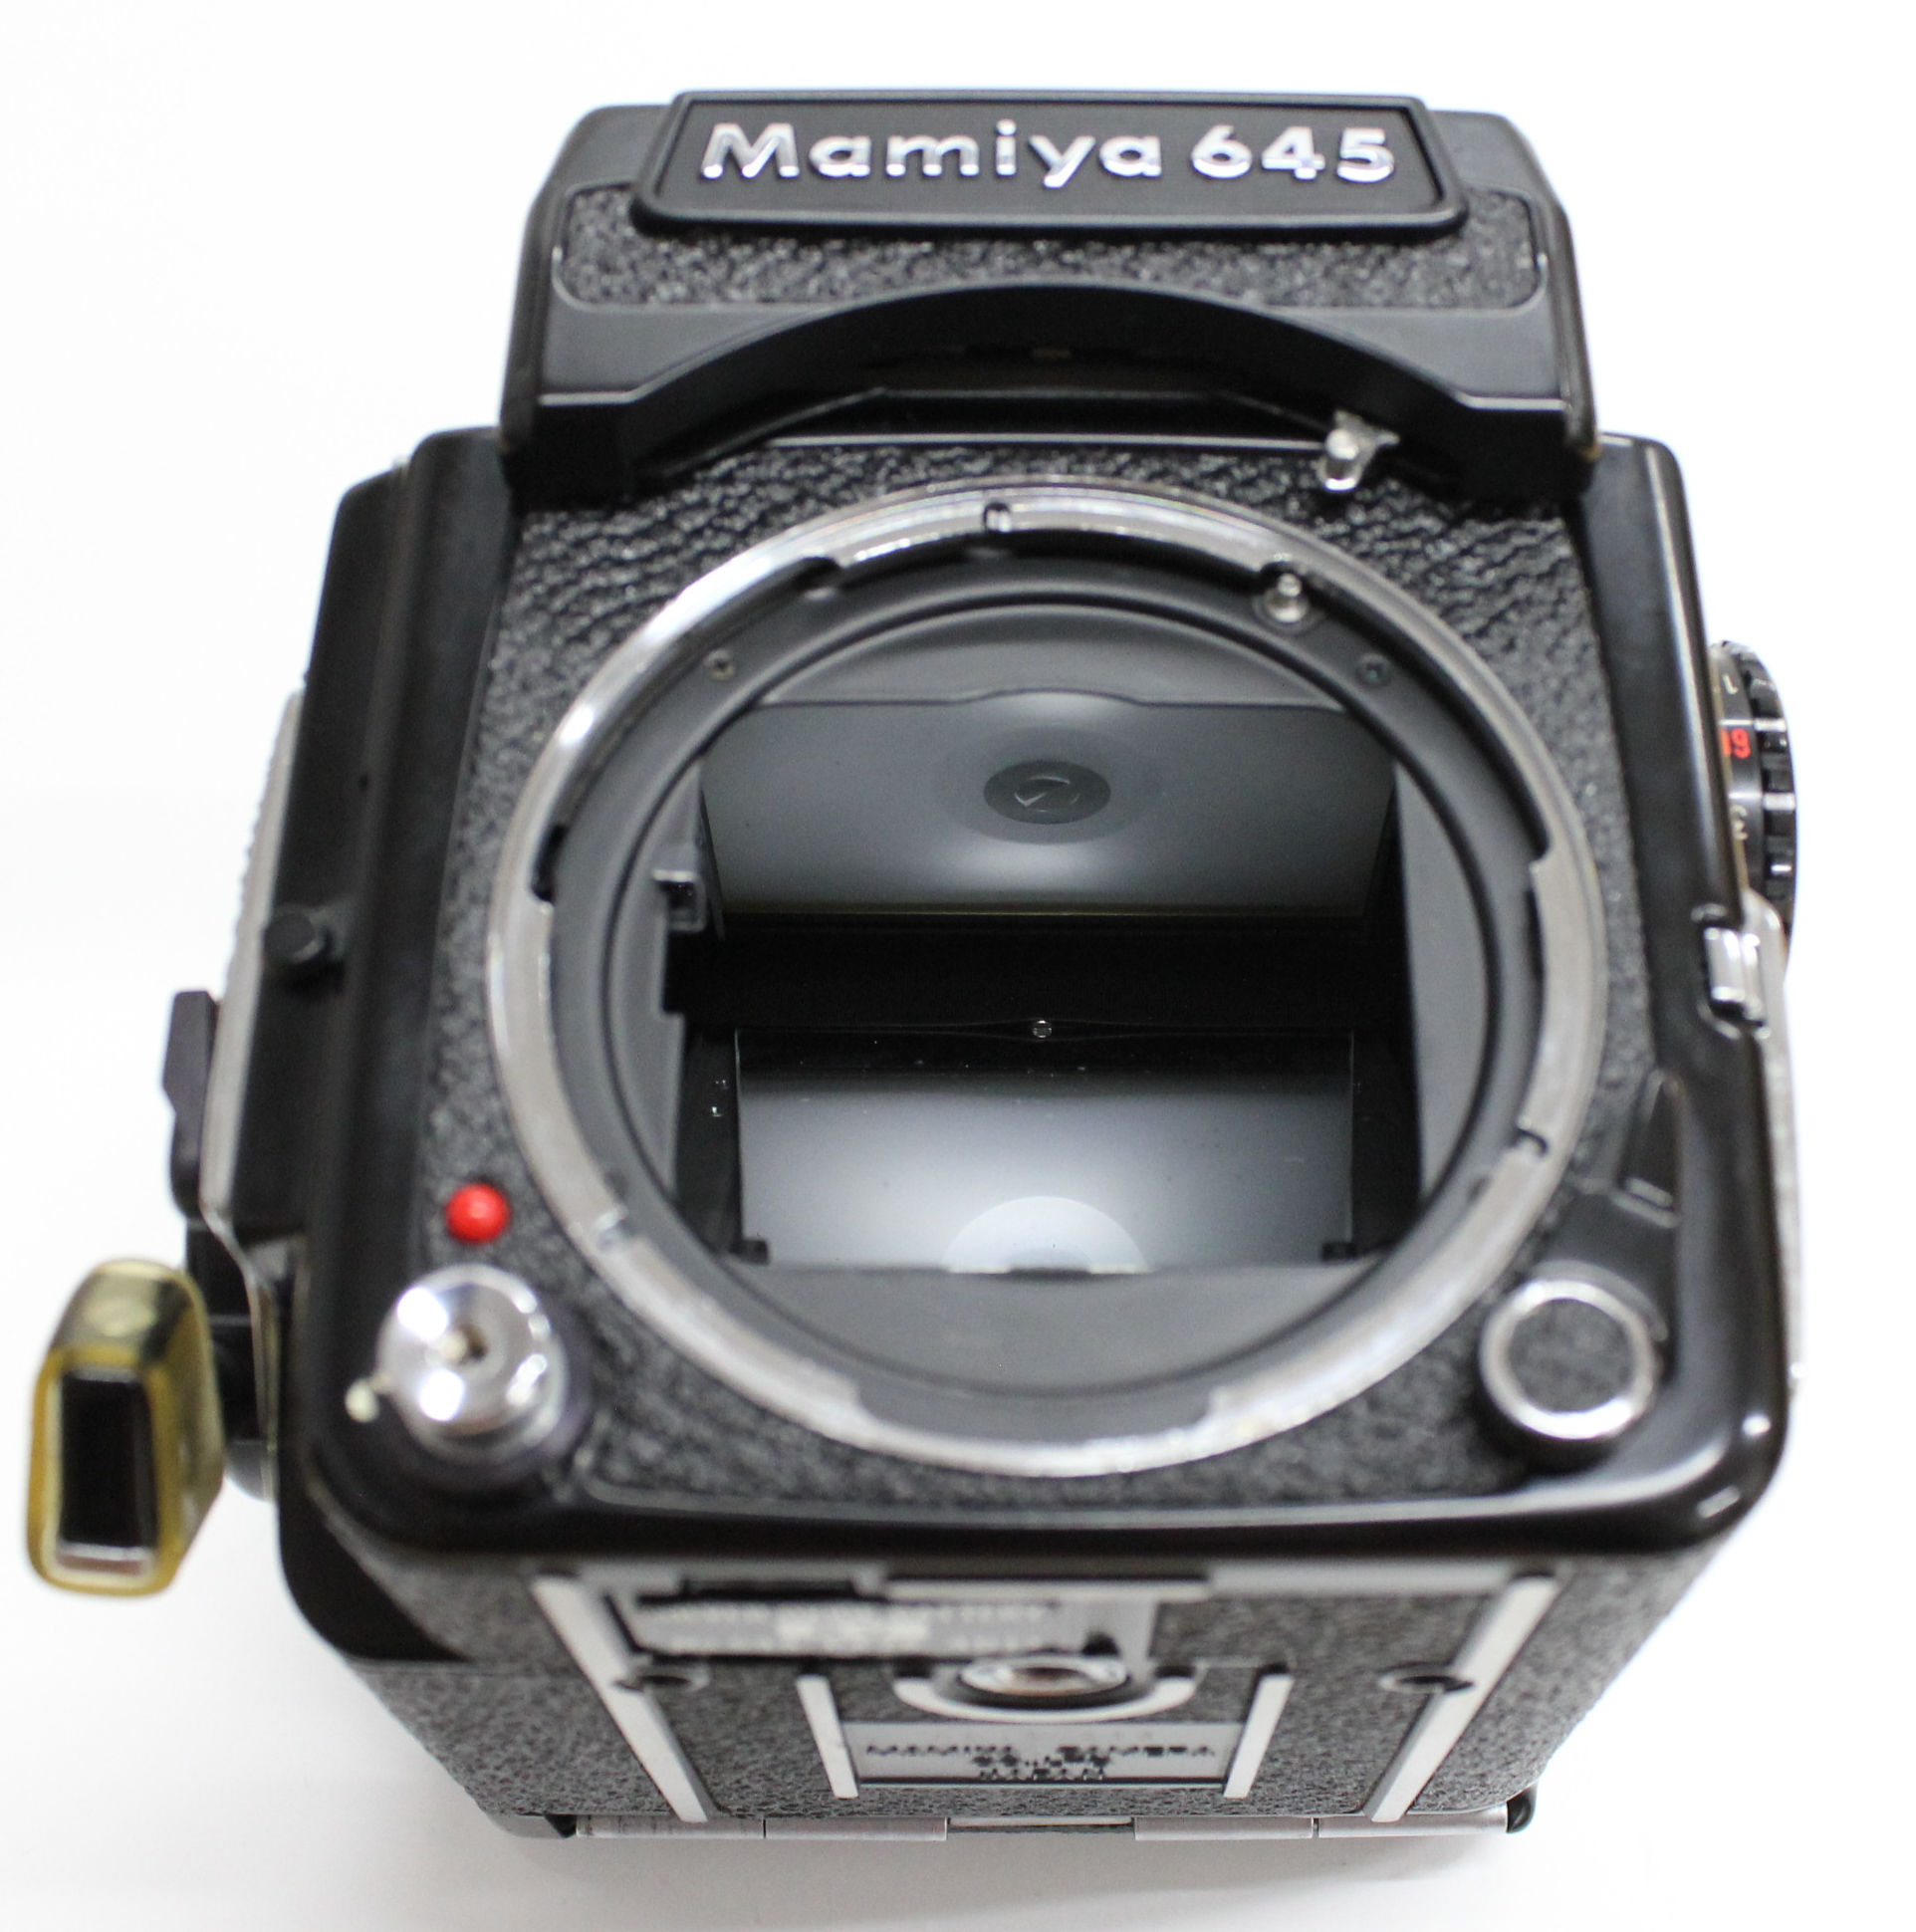  Mamiya M645 1000S Medium Format Film Camera Body from Japan Photo 10